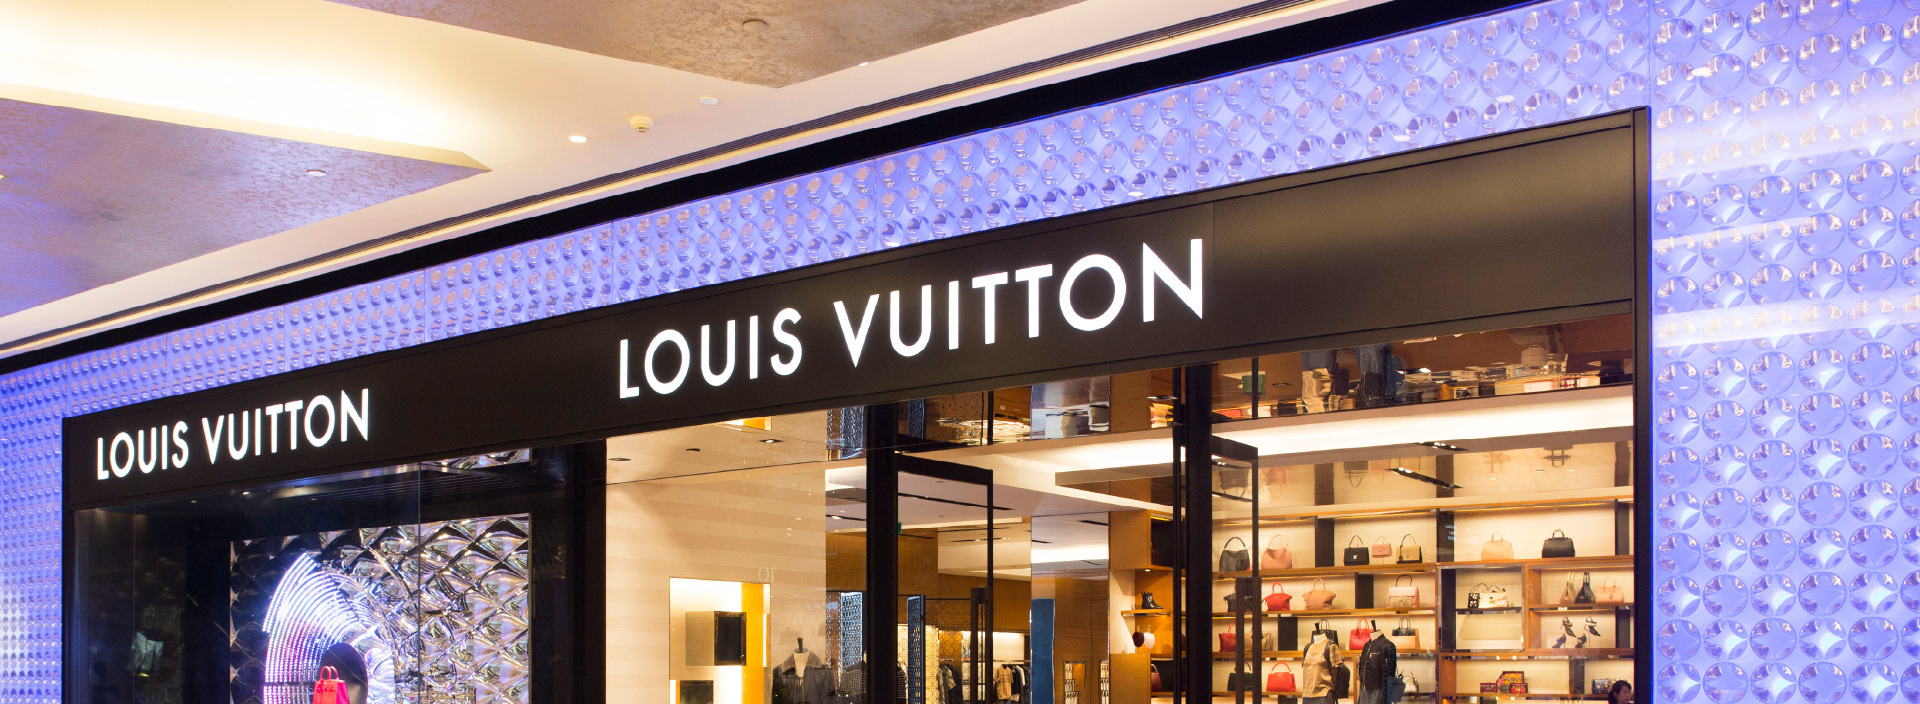 Louis Vuitton Museum – The One Centre